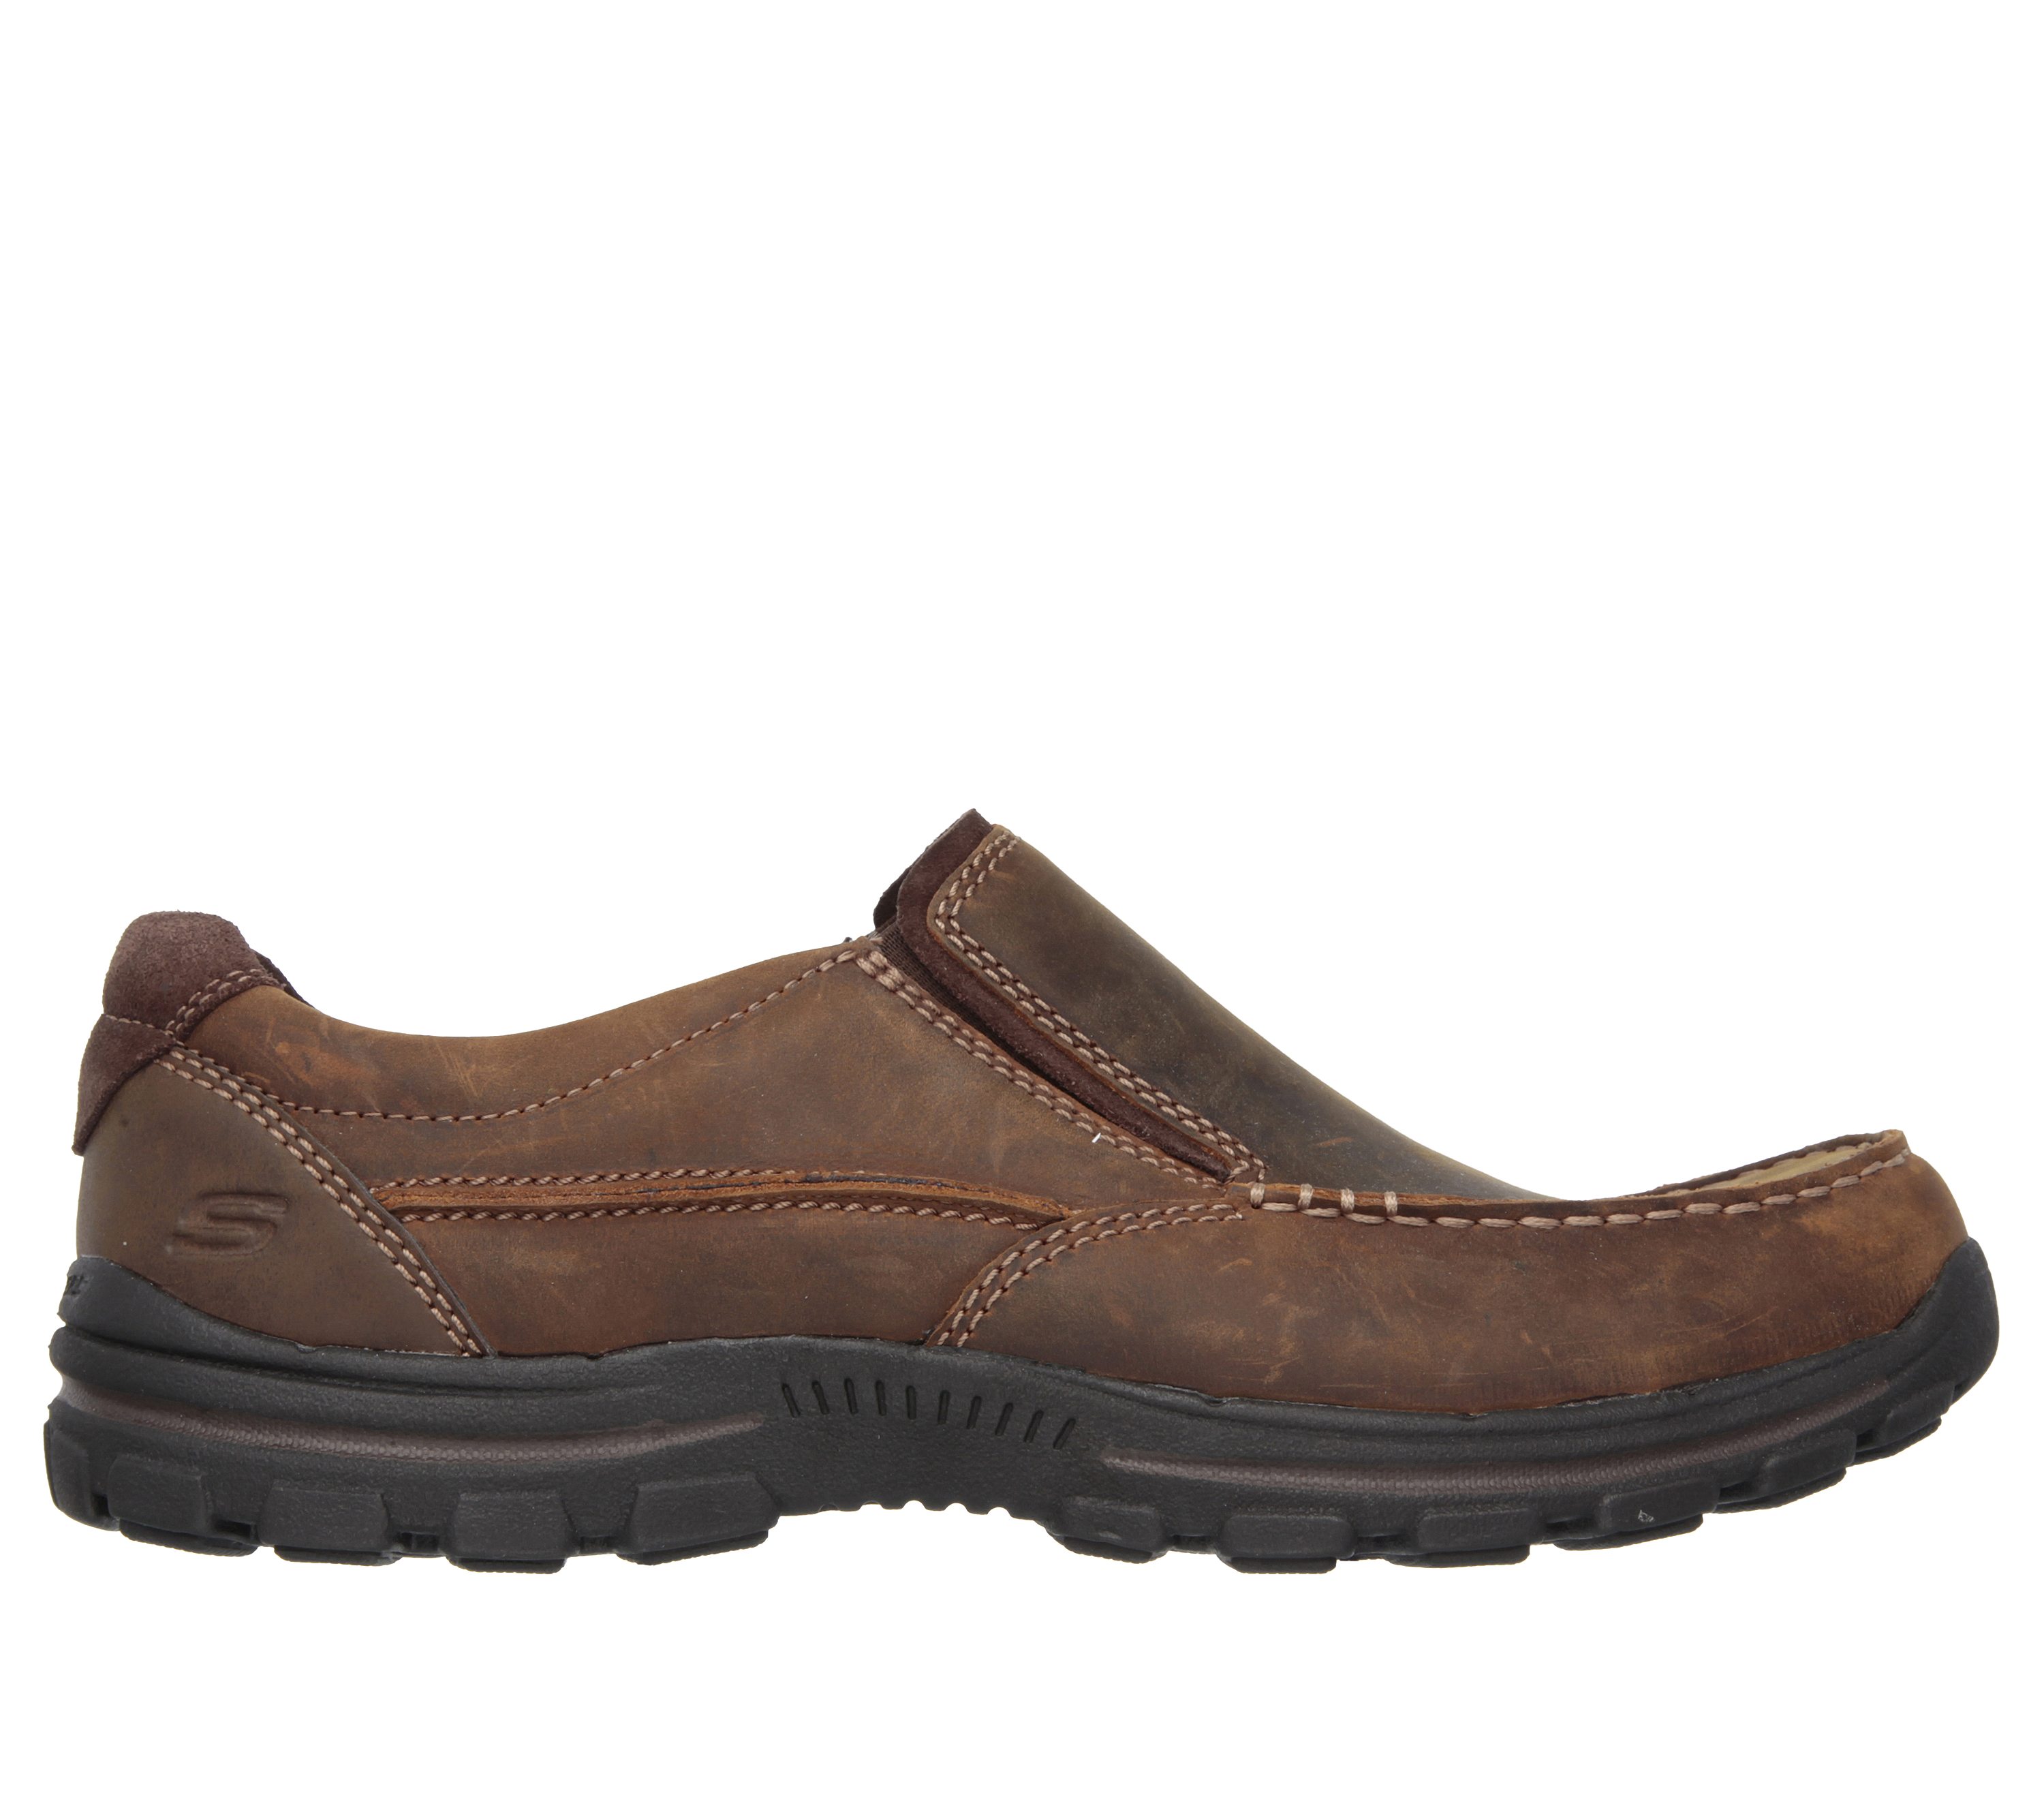 Buy > brown slip on shoes > in stock